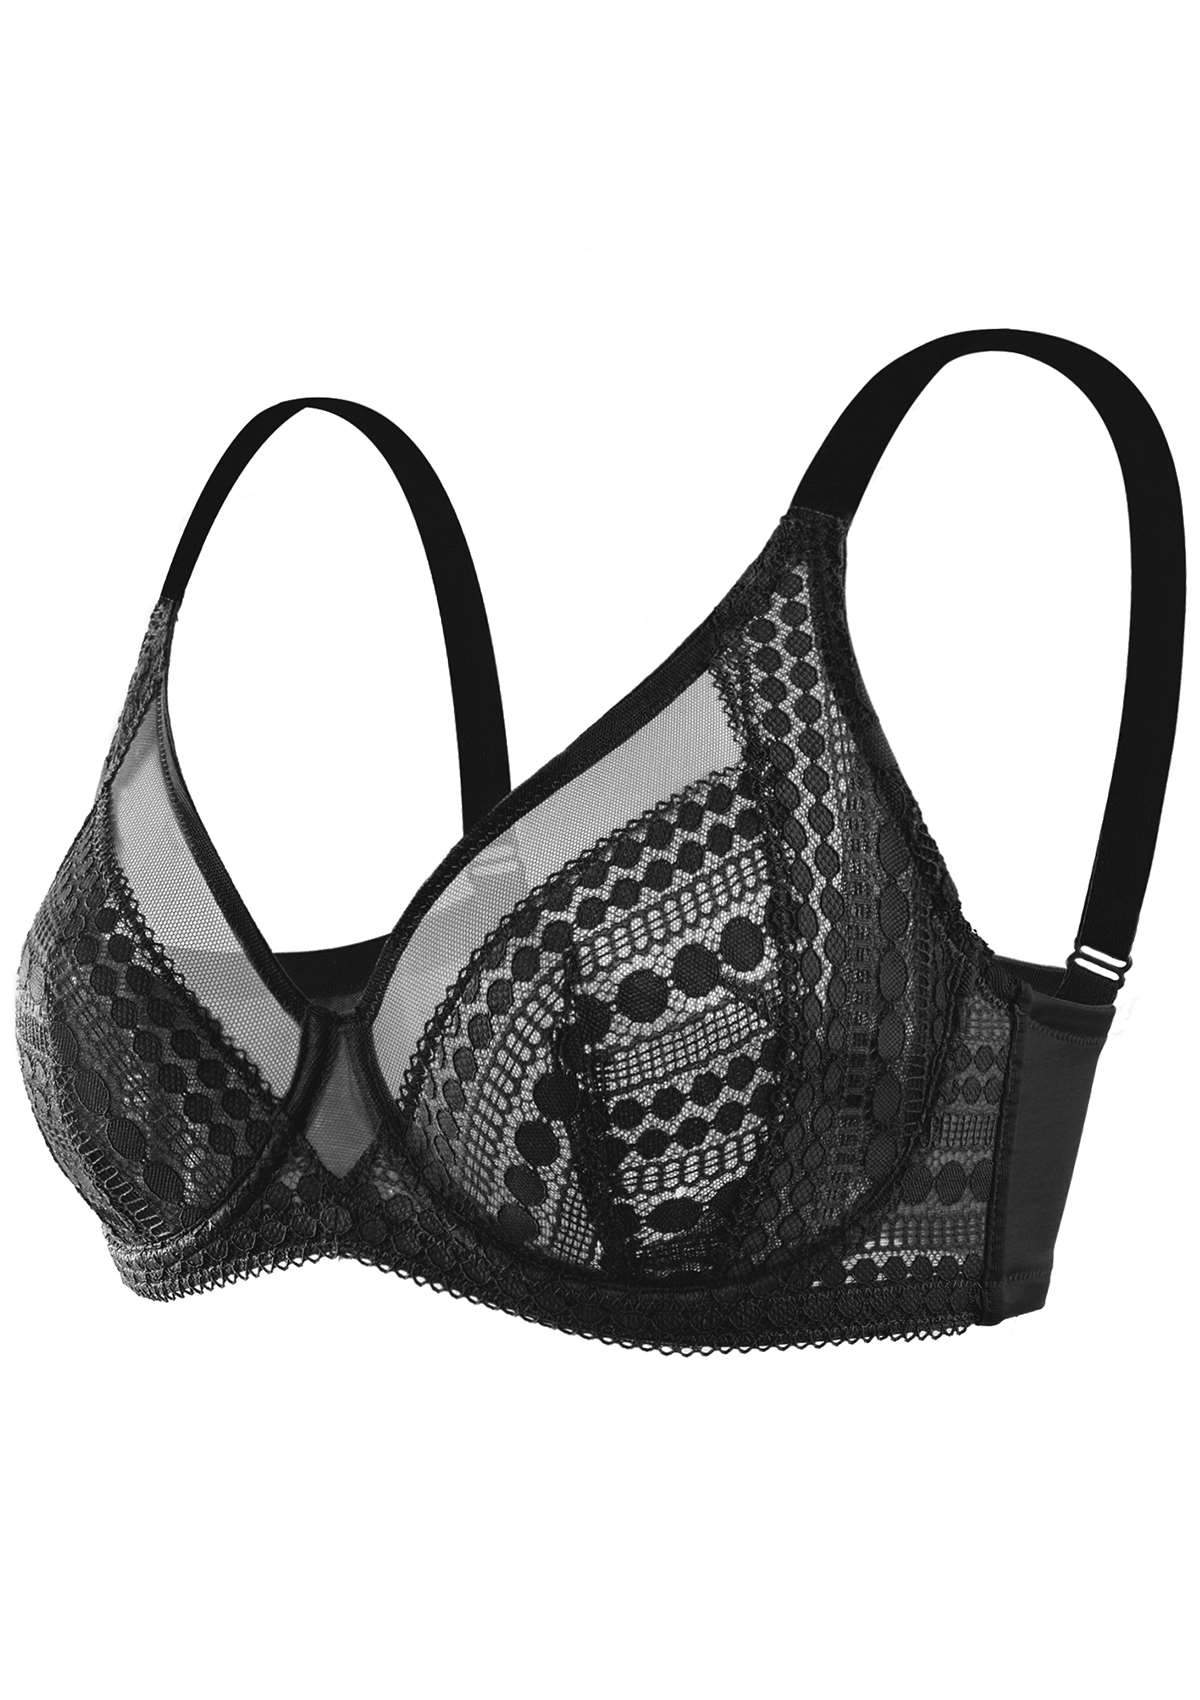 HSIA Heroine Matching Bra And Panties: Unlined Lace Unpadded Bra - Black / 36 / DD/E